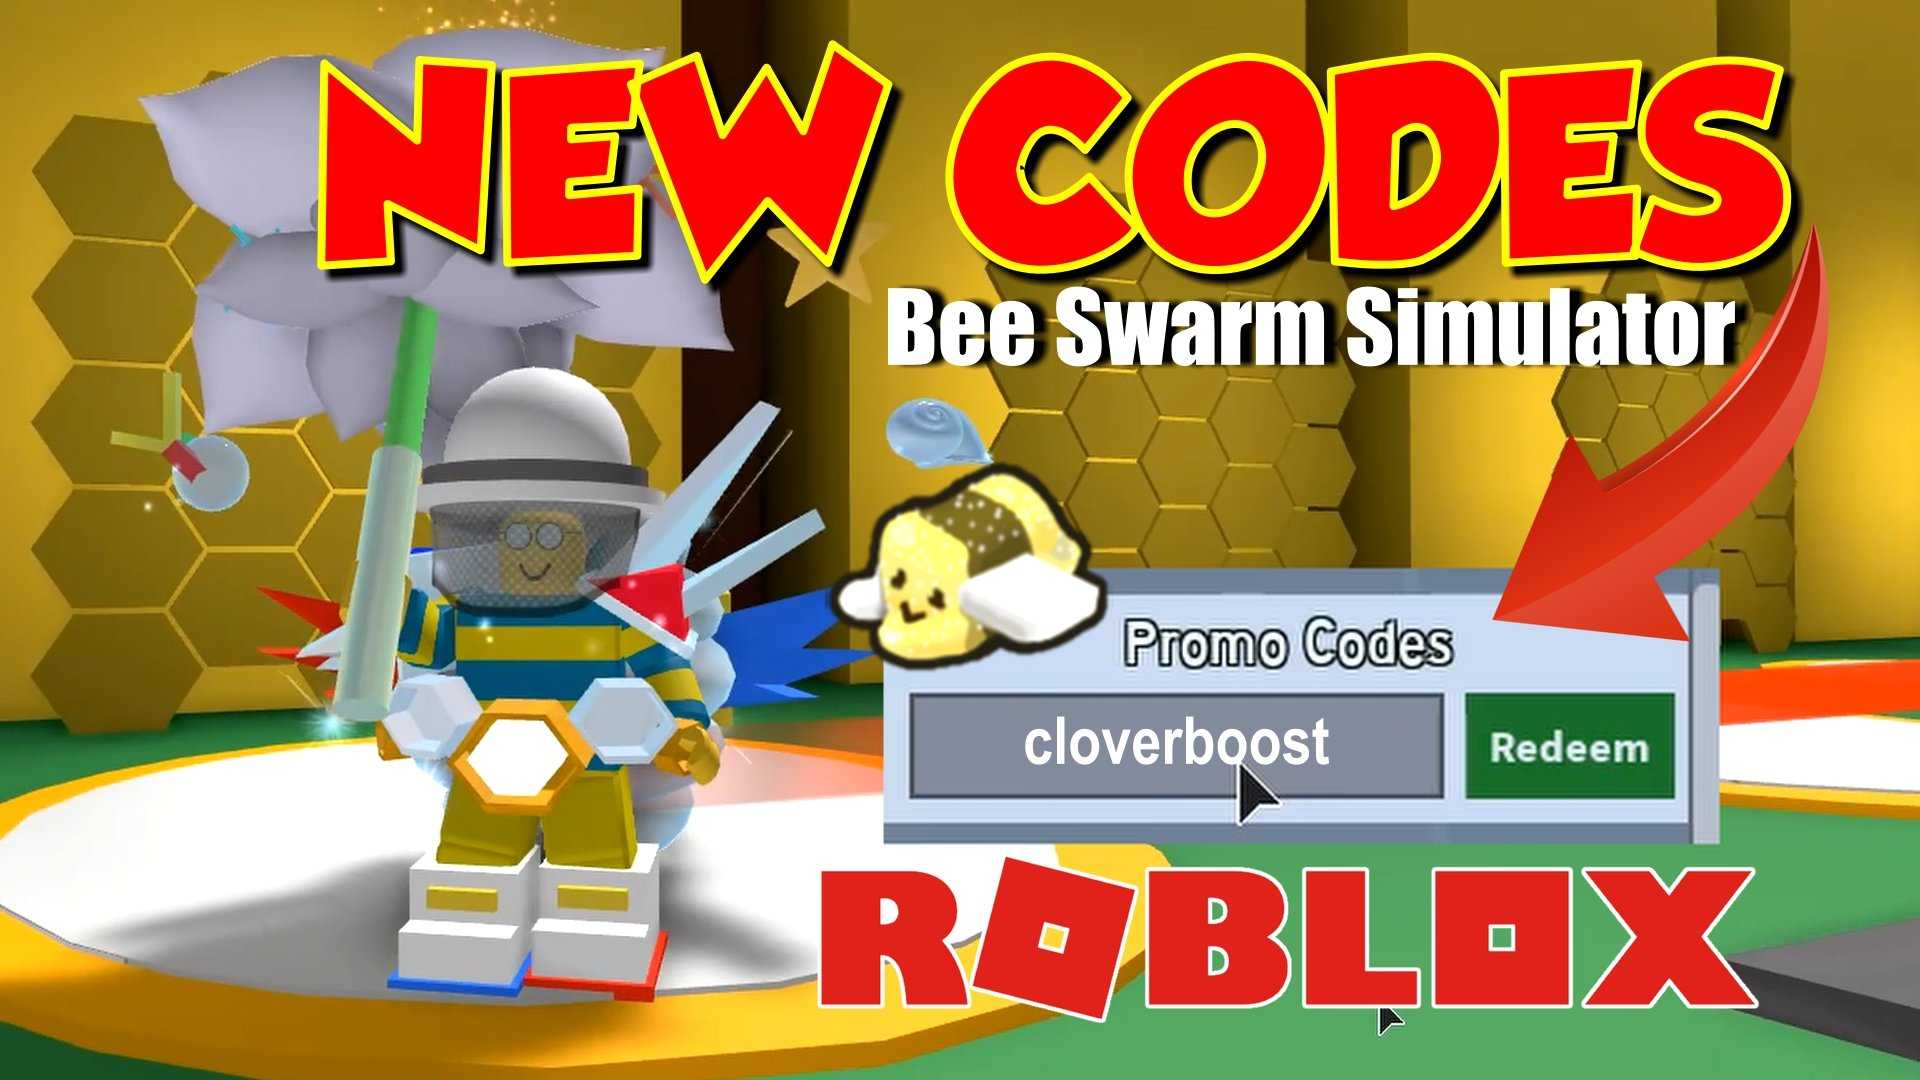 New coding simulator. Bee Swarm Simulator codes. РОБЛОКС Bee Swarm Simulator. РОБЛОКС промокоды Bee Swarm Simulator. Roblox Bee Swarm Simulator codes.